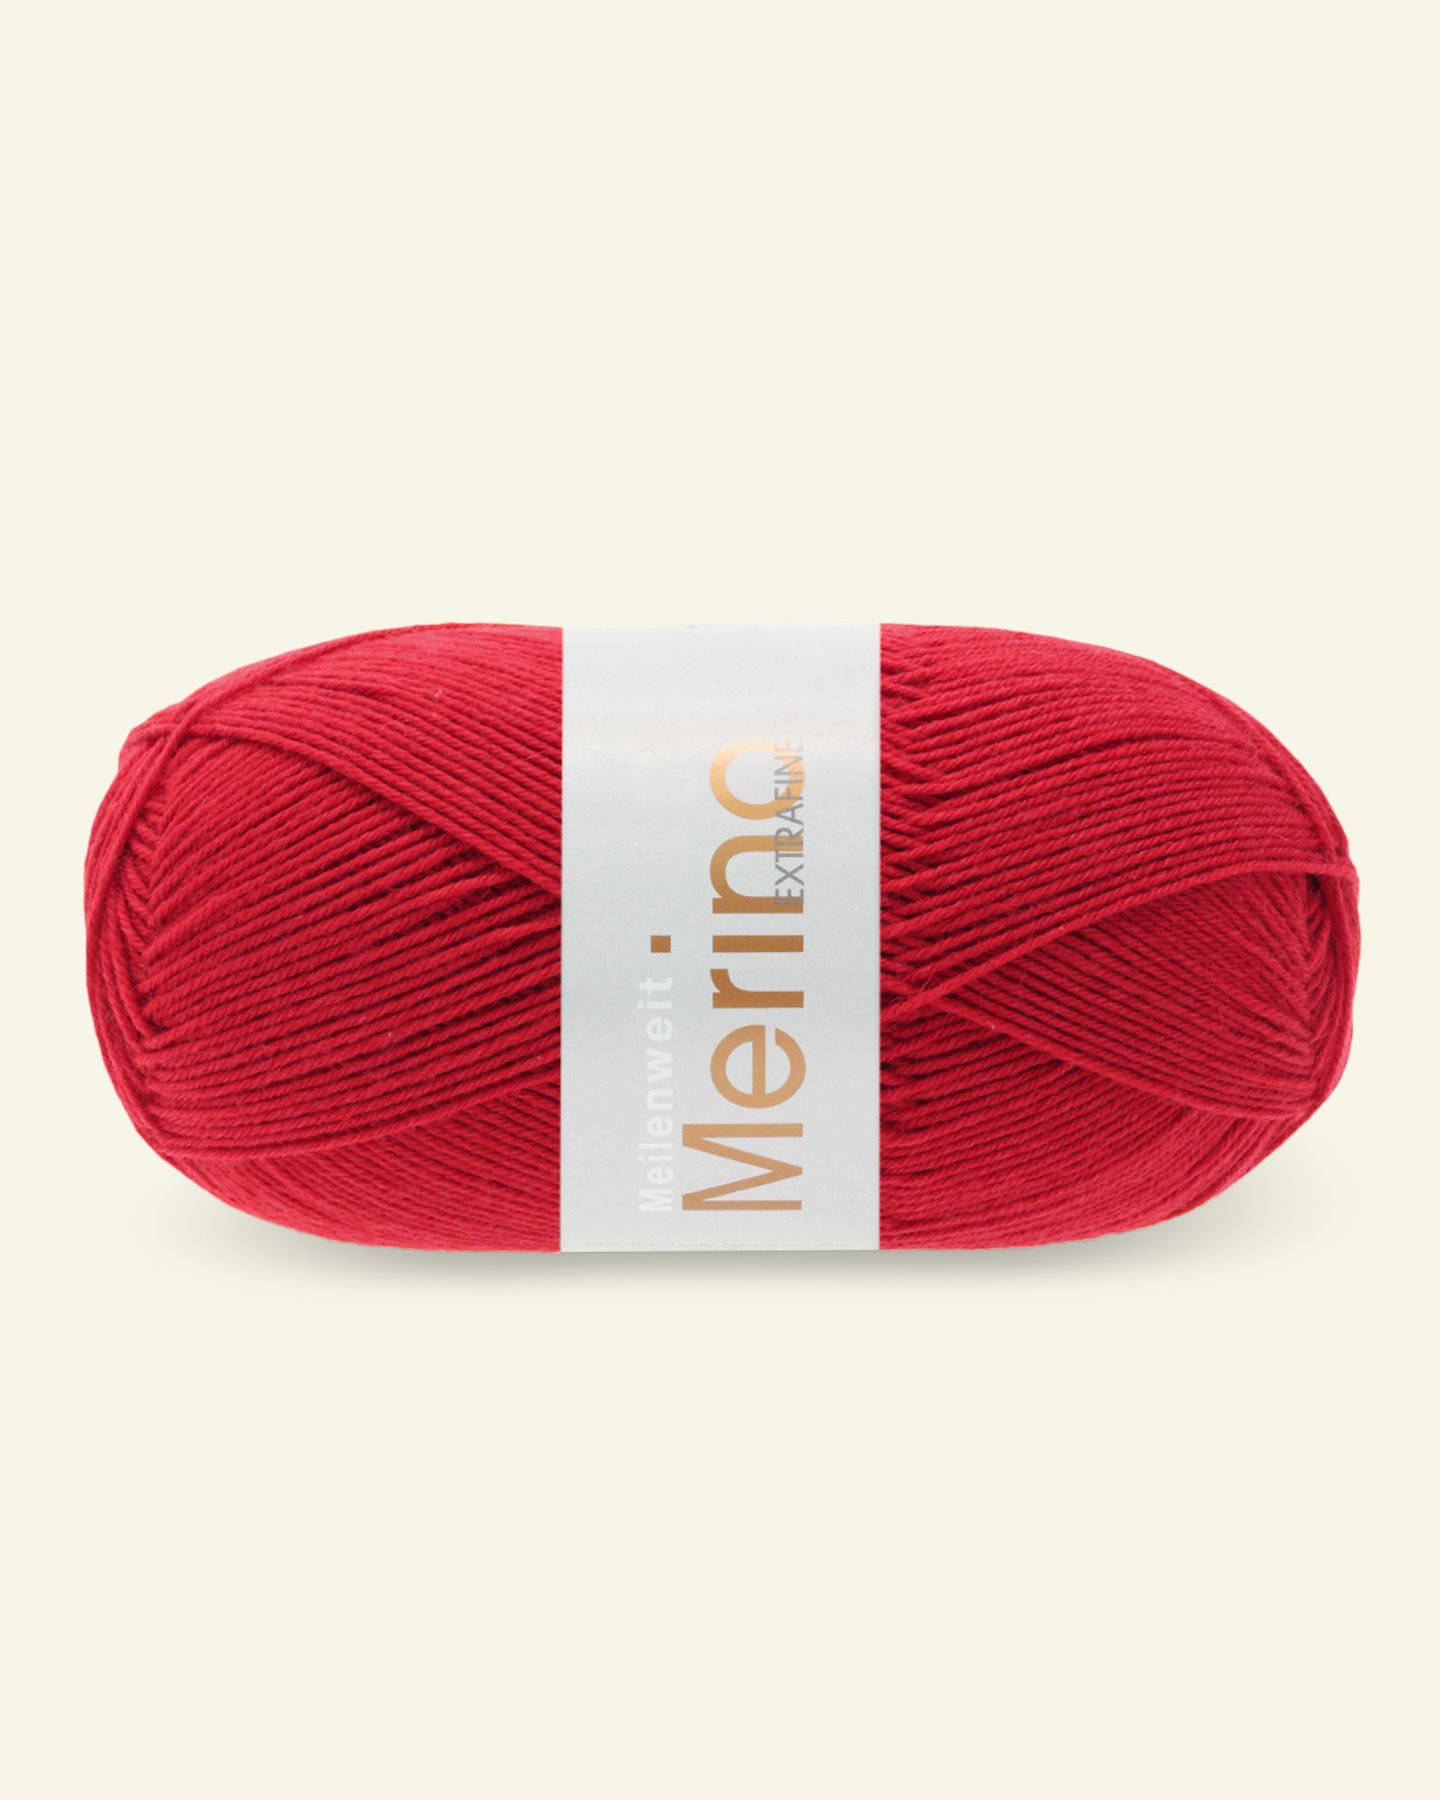 Buy Merino wool yarn for knitting and crochet